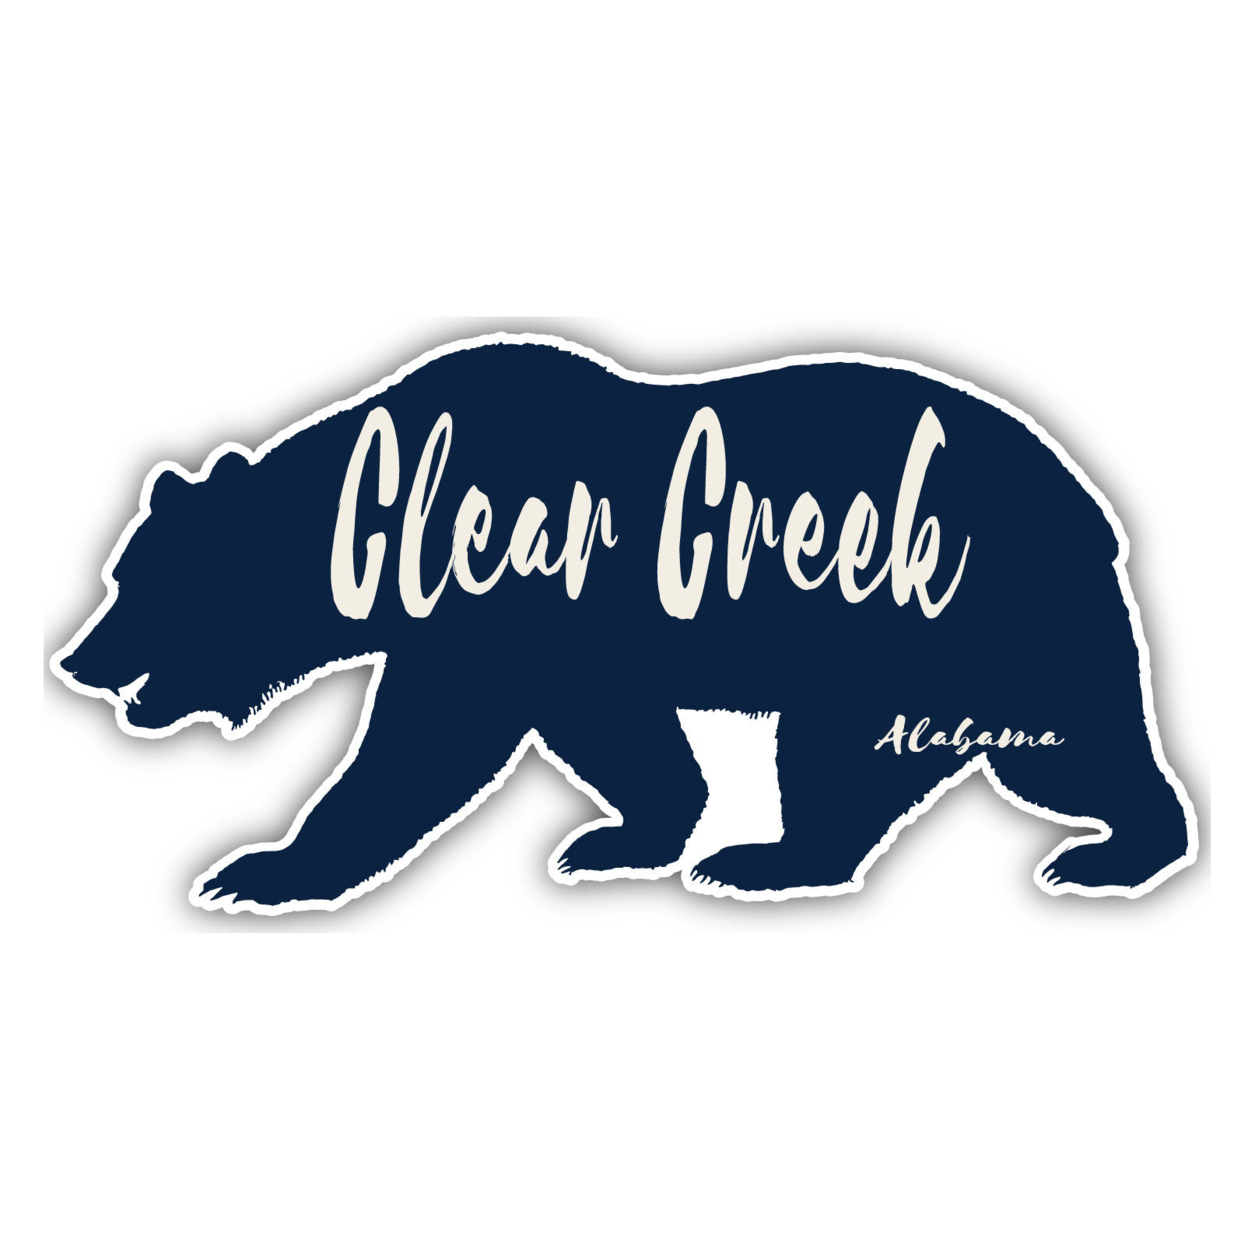 Clear Creek Alabama Souvenir Decorative Stickers (Choose Theme And Size) - Single Unit, 6-Inch, Adventures Awaits